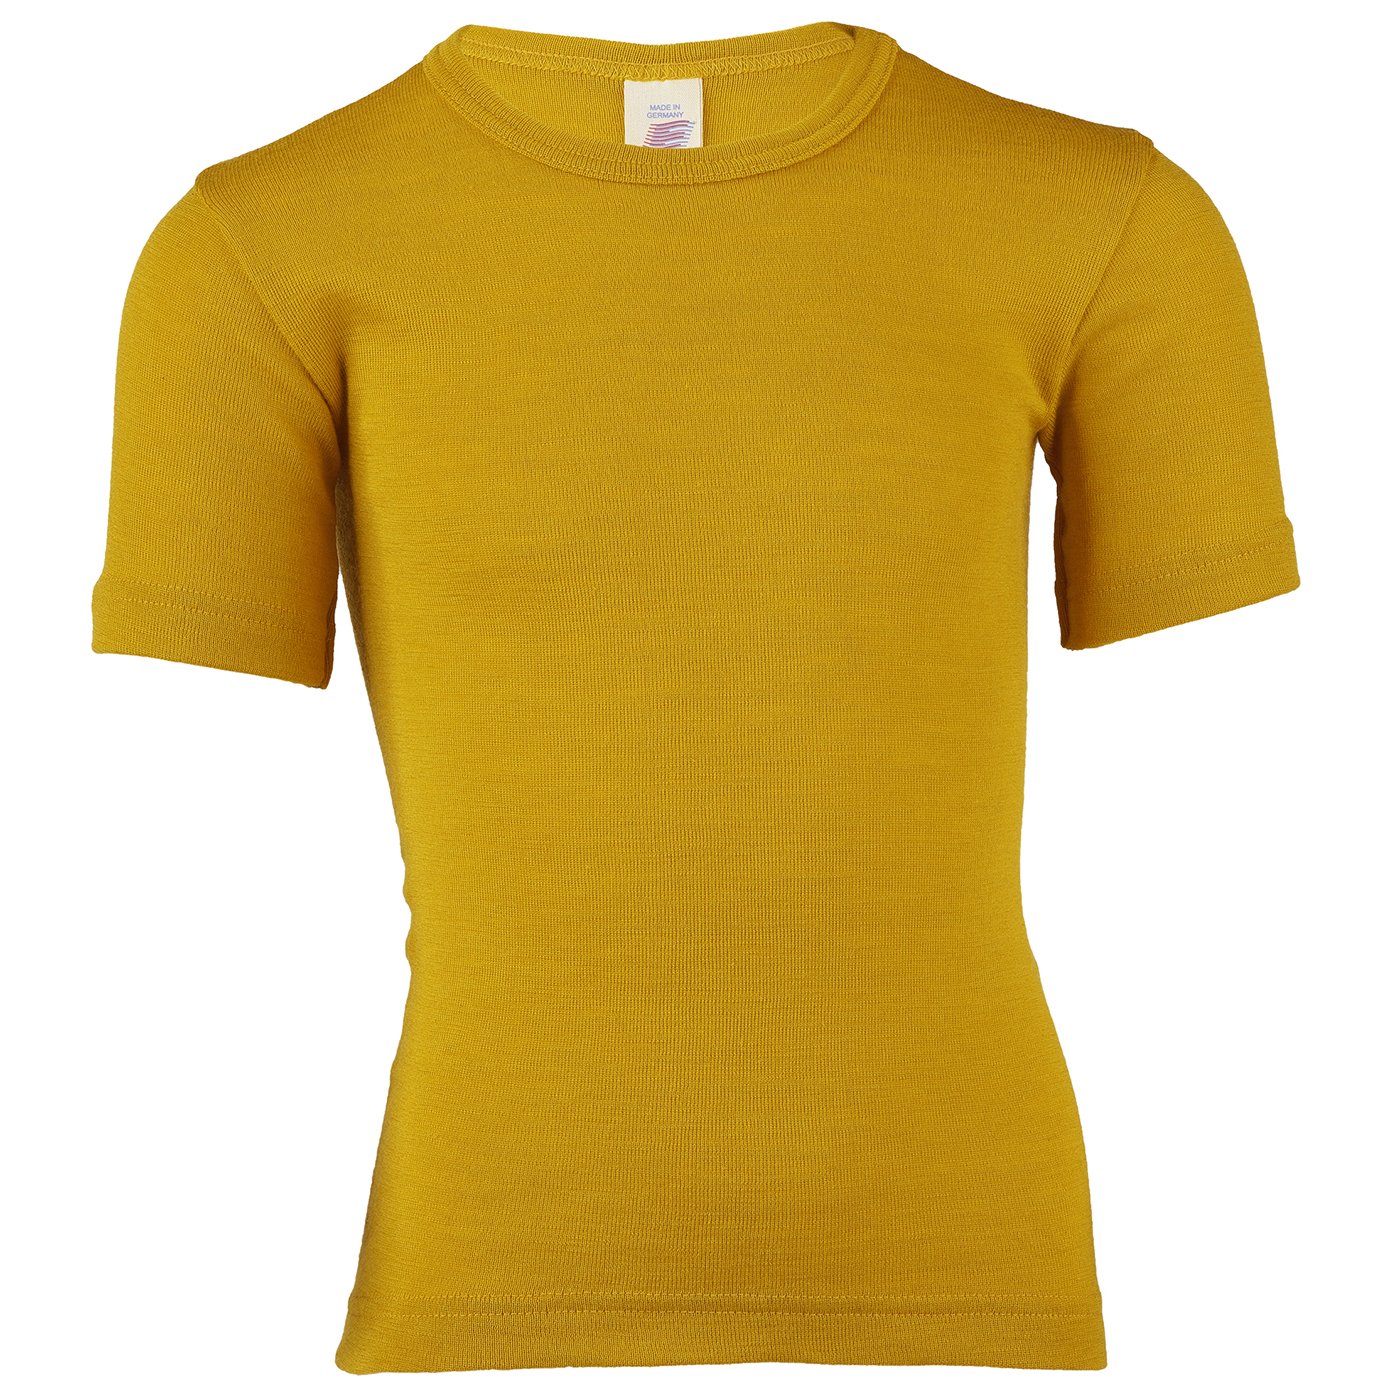 Plain Wool/Silk Short-sleeved Vest Top by Engel | Engel's plain ...